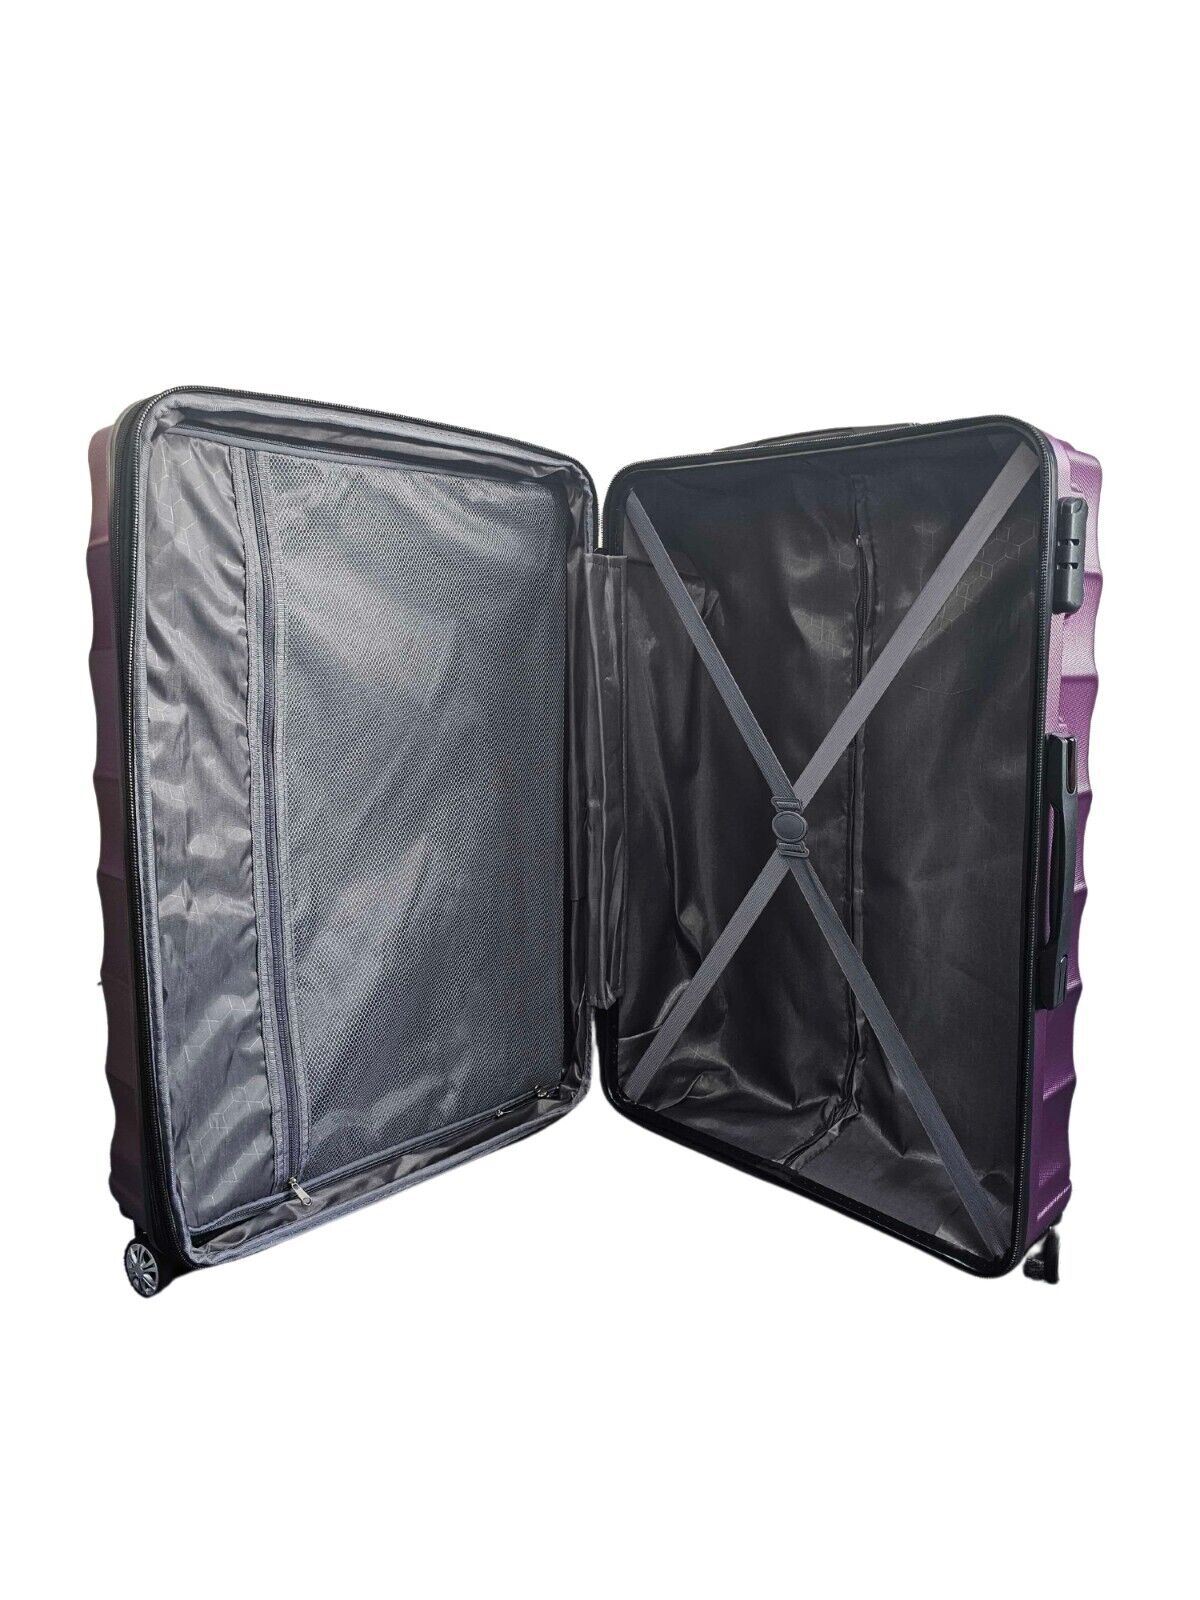 Chatom Medium Hard Shell Suitcase in Purple